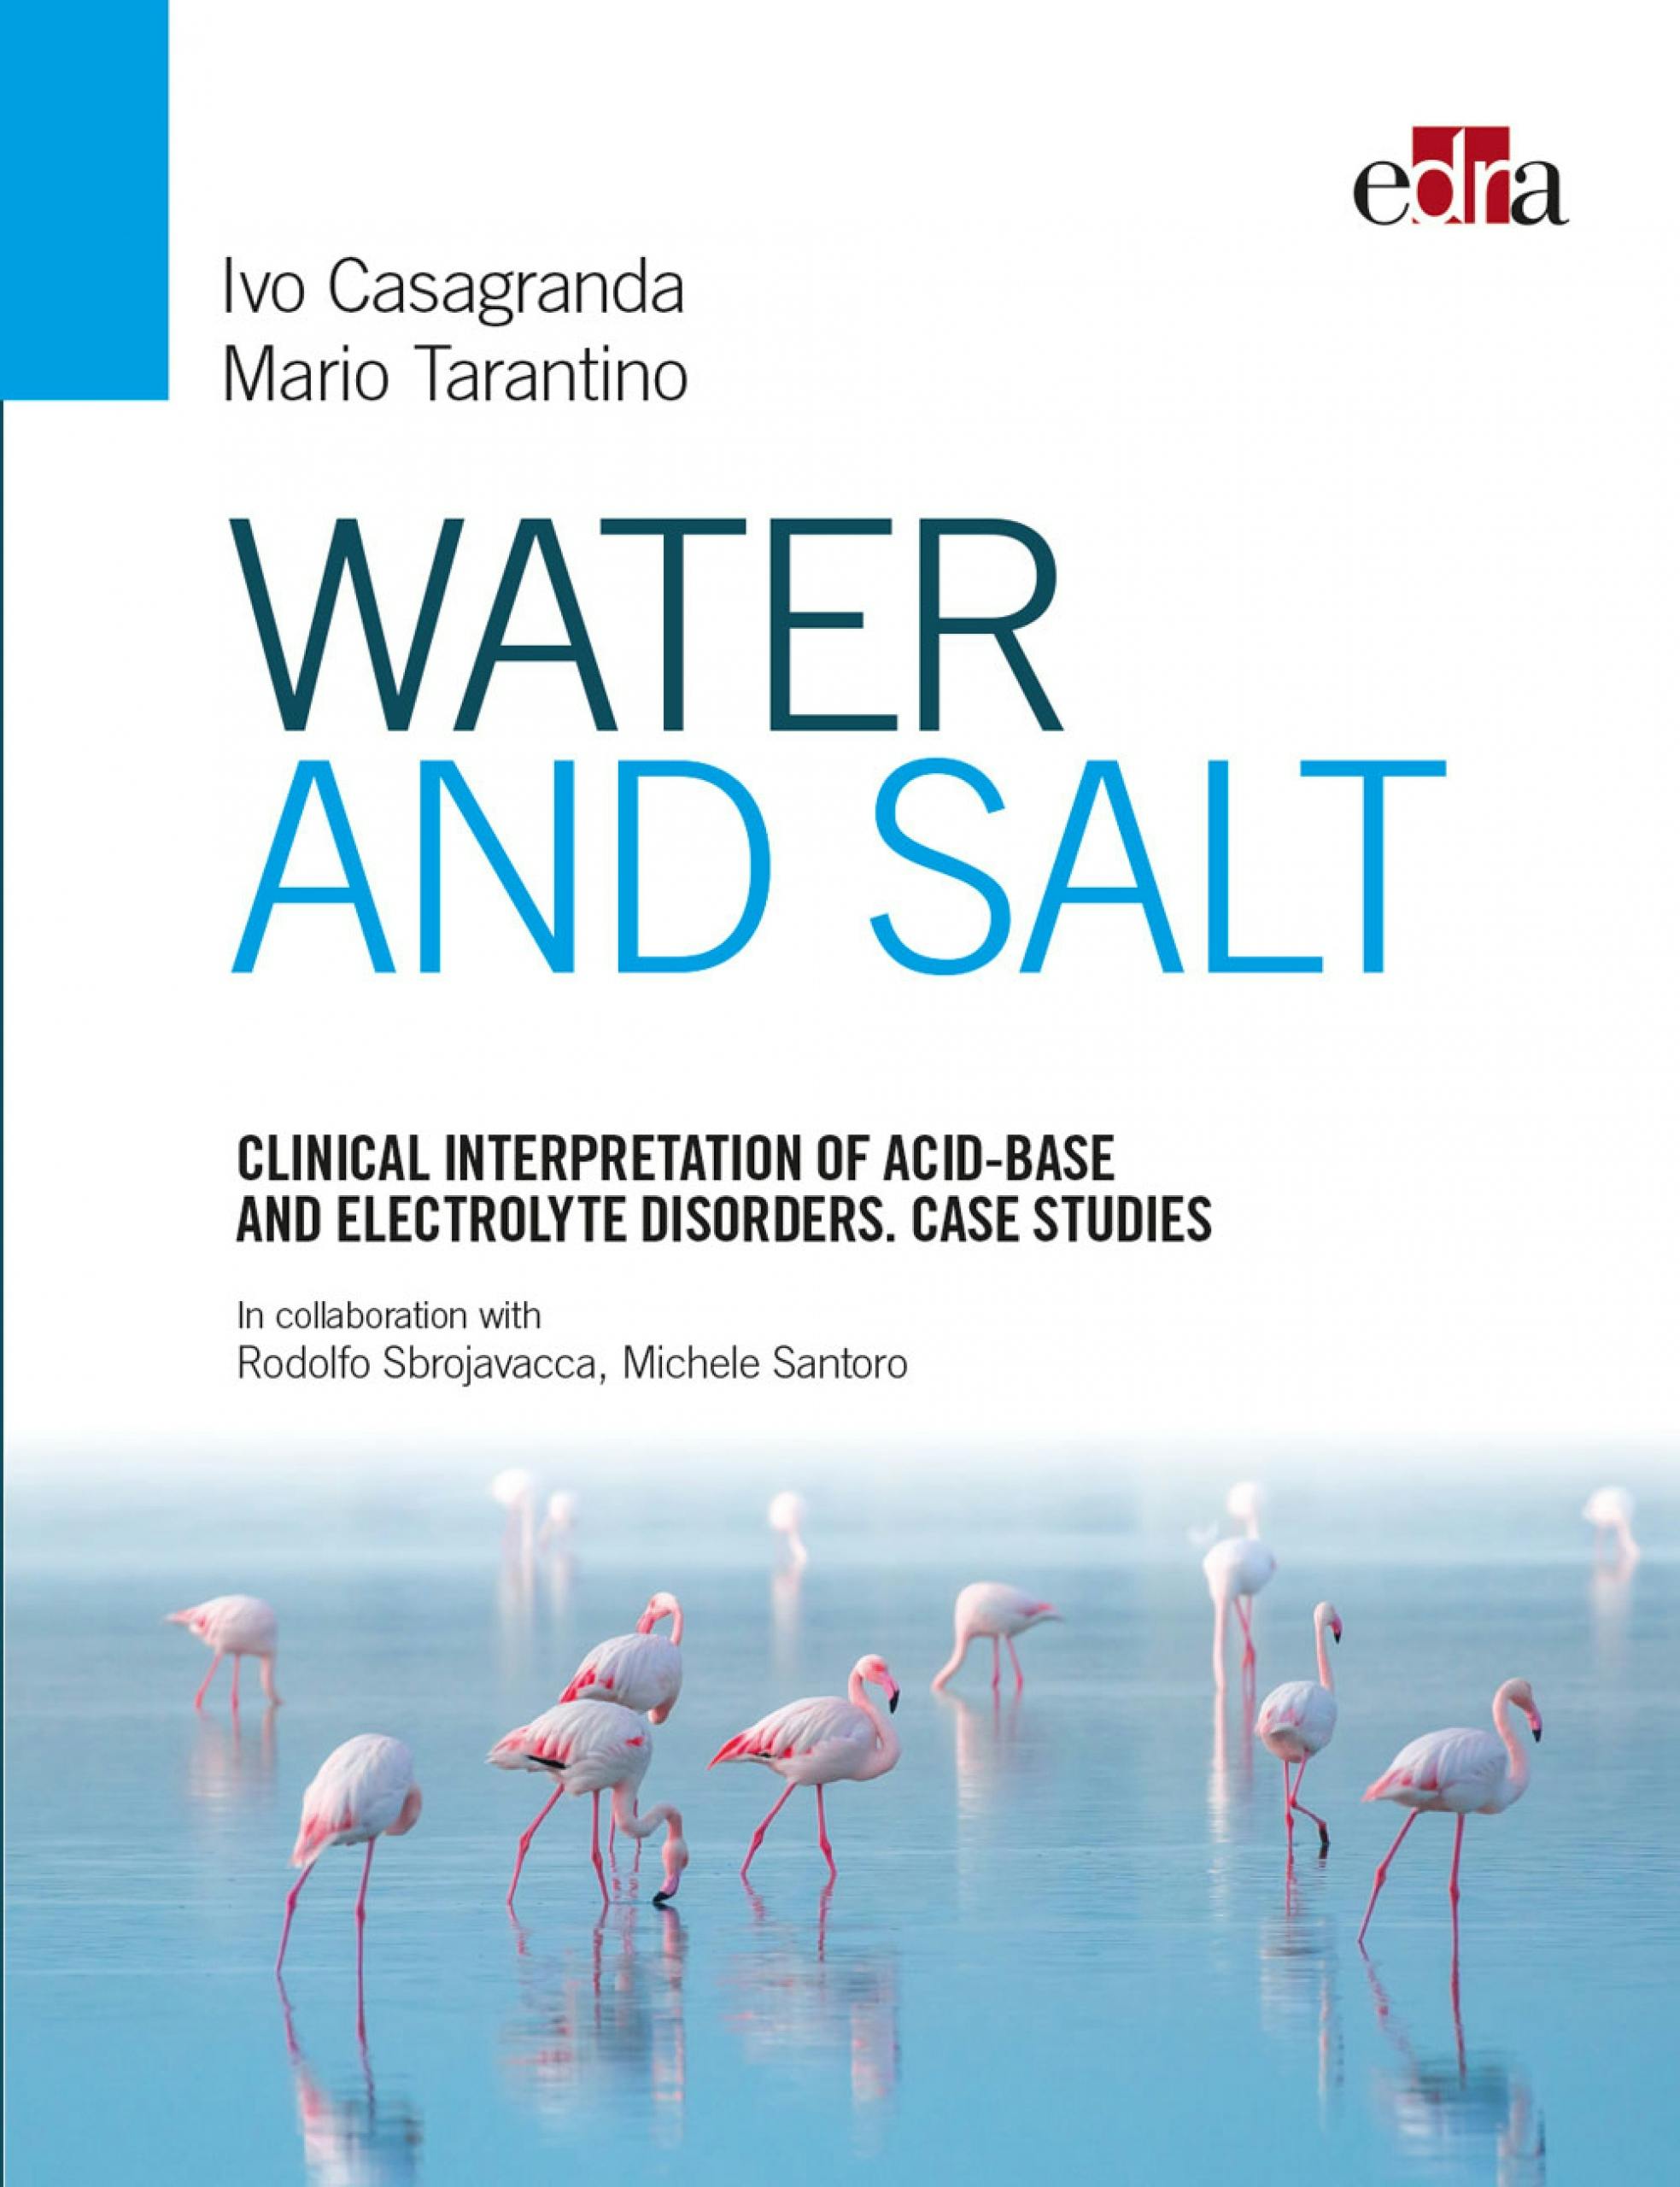 Clinical interpretation of acid-base and electrolyte disorders - Mario Tarantino, Ivo Casagranda